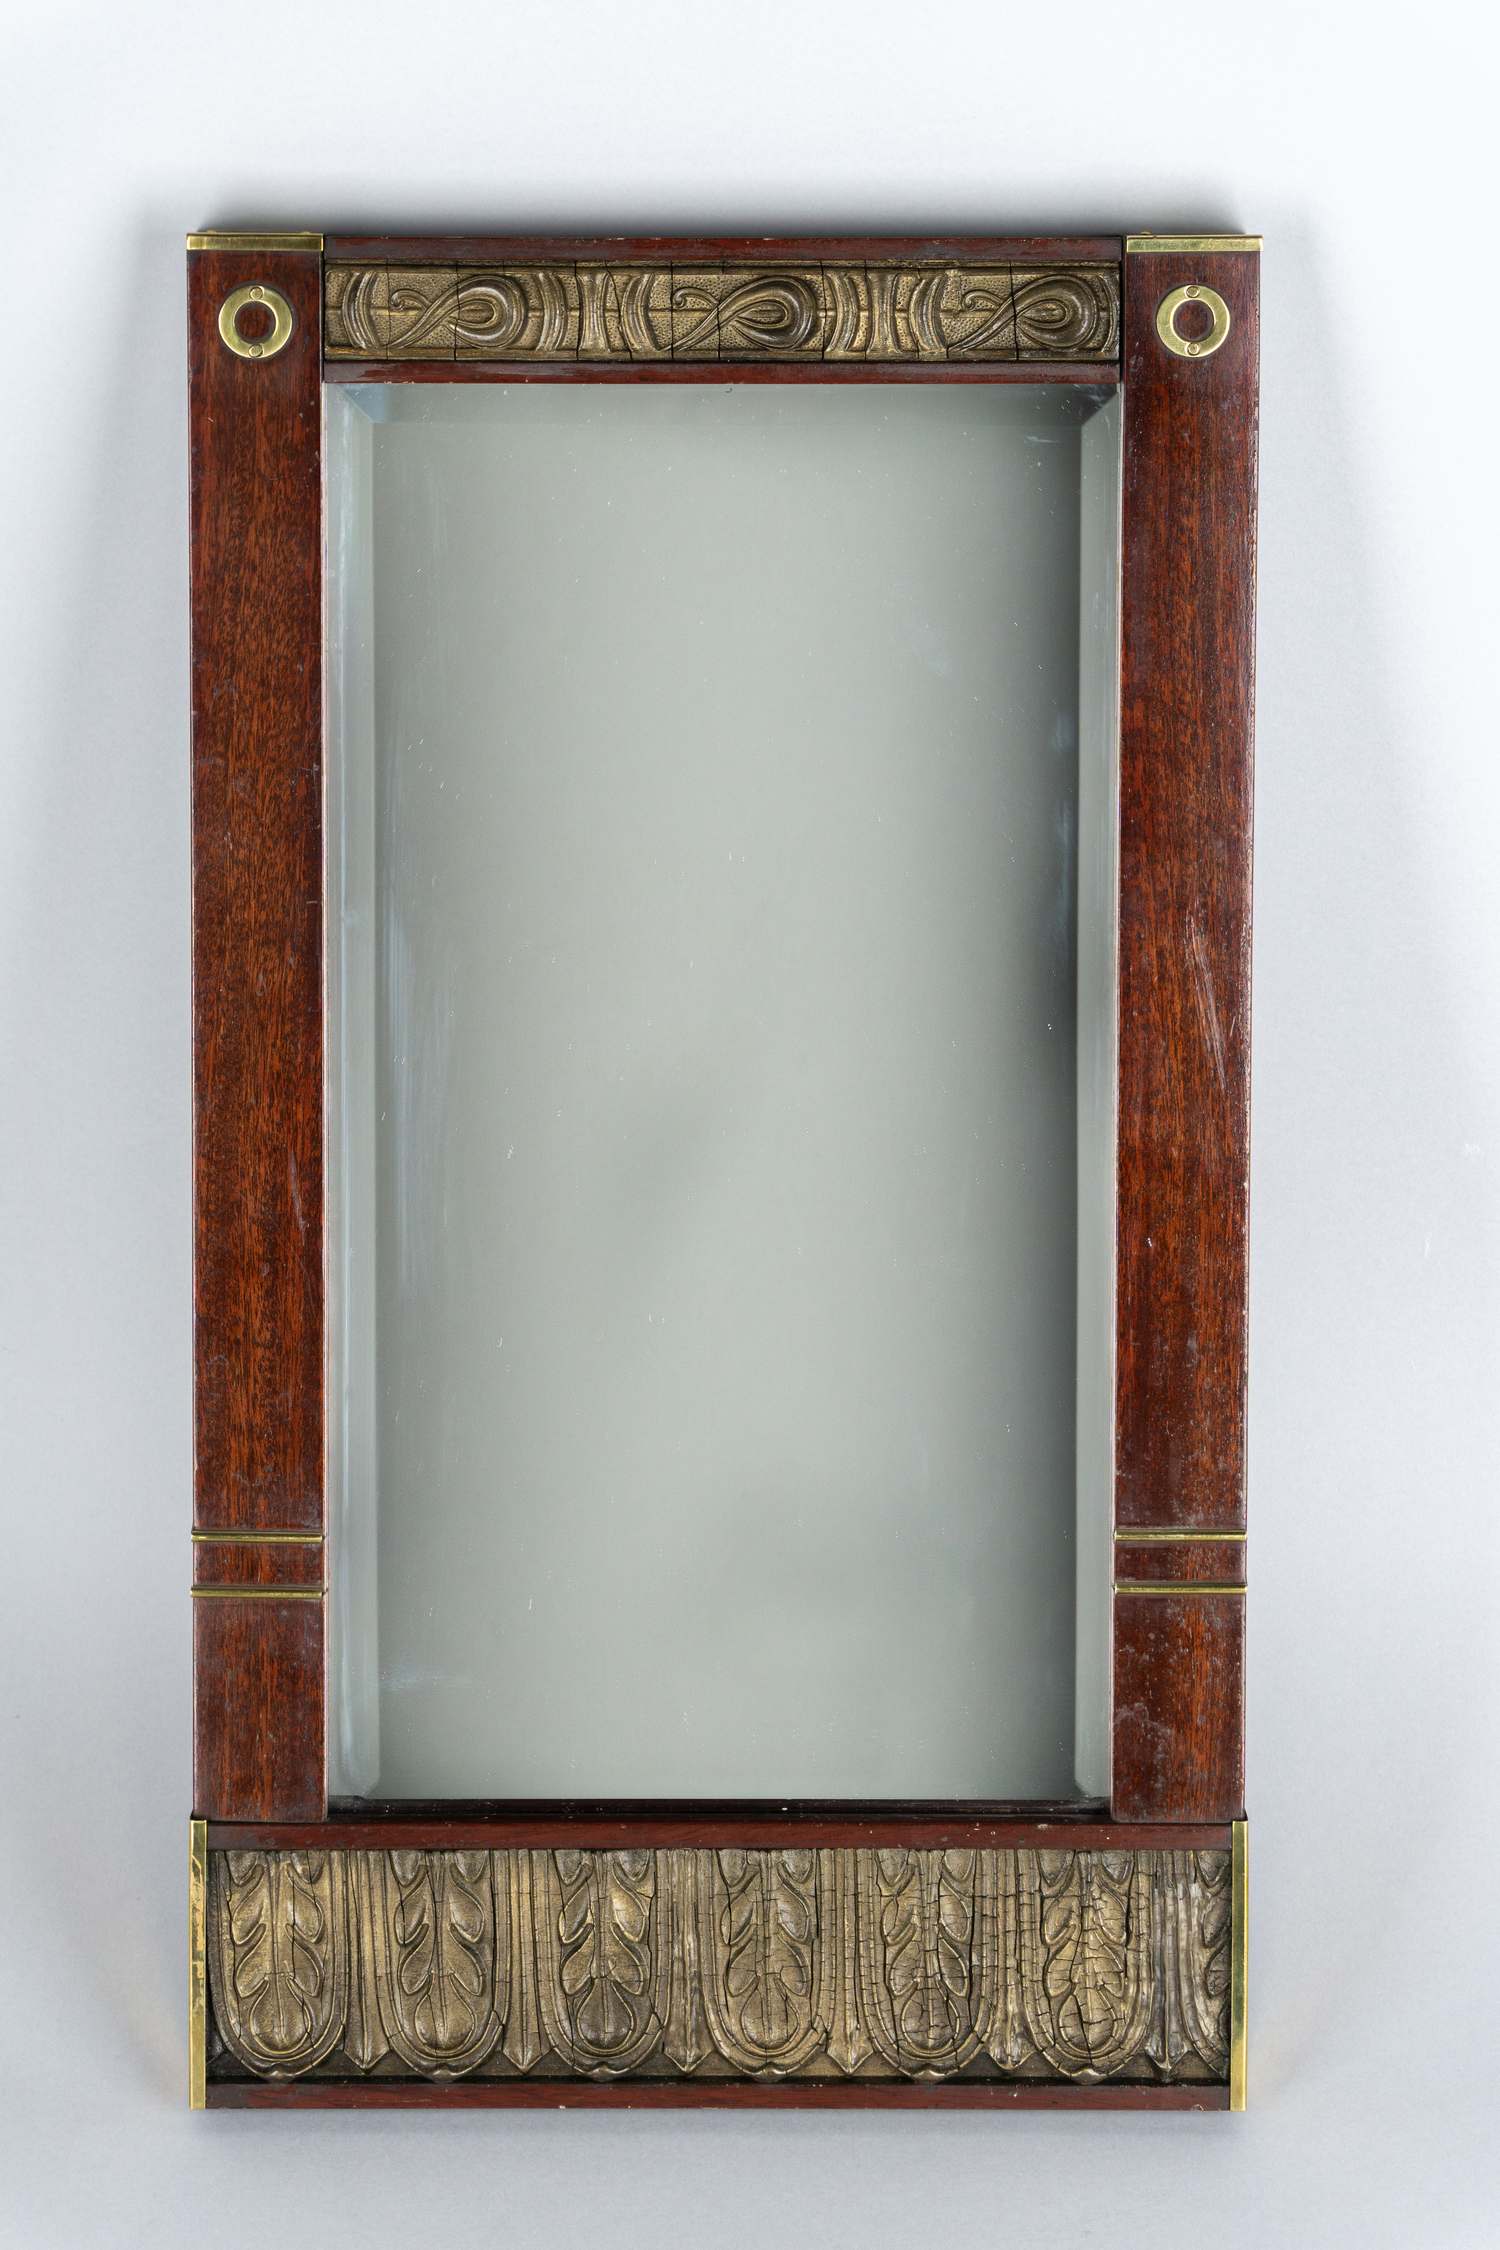 Зеркало в стиле ампир с узором в виде листьев аканфа. Западная Европа, вторая половина XIX века.